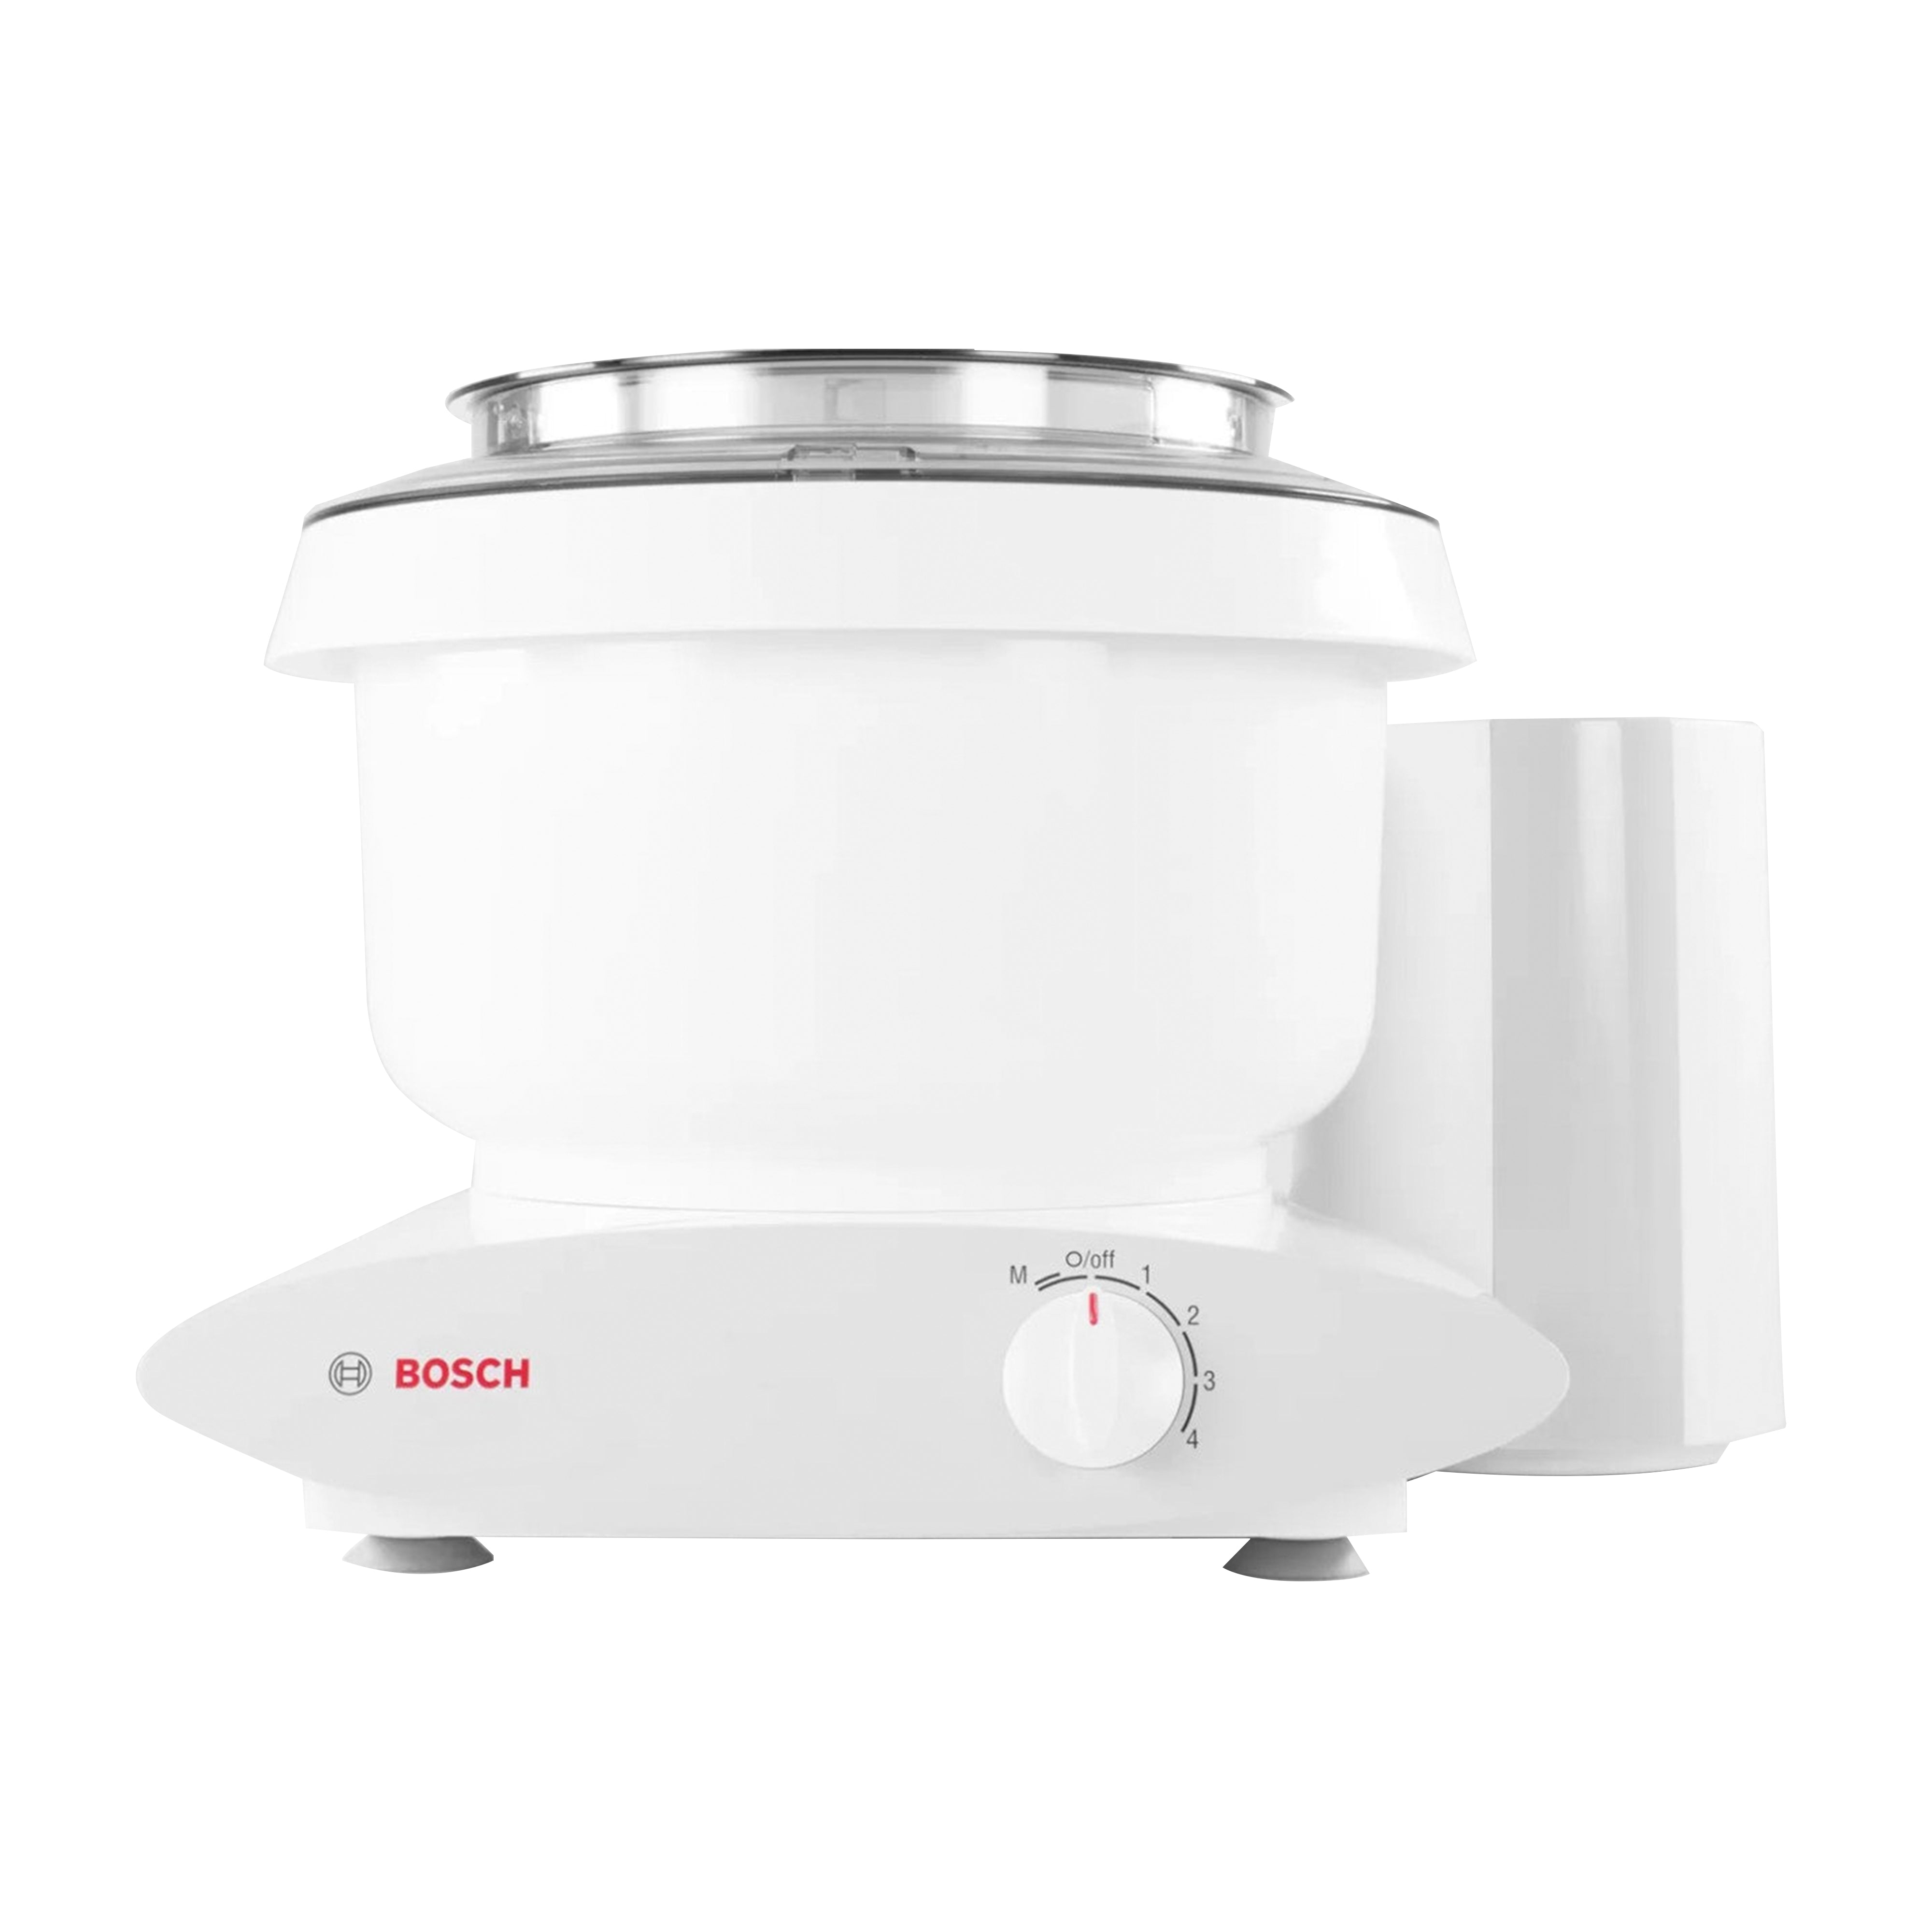 Bosch Universal Plus 6.5 Qt. Mixer + Flour Sifter Attachment